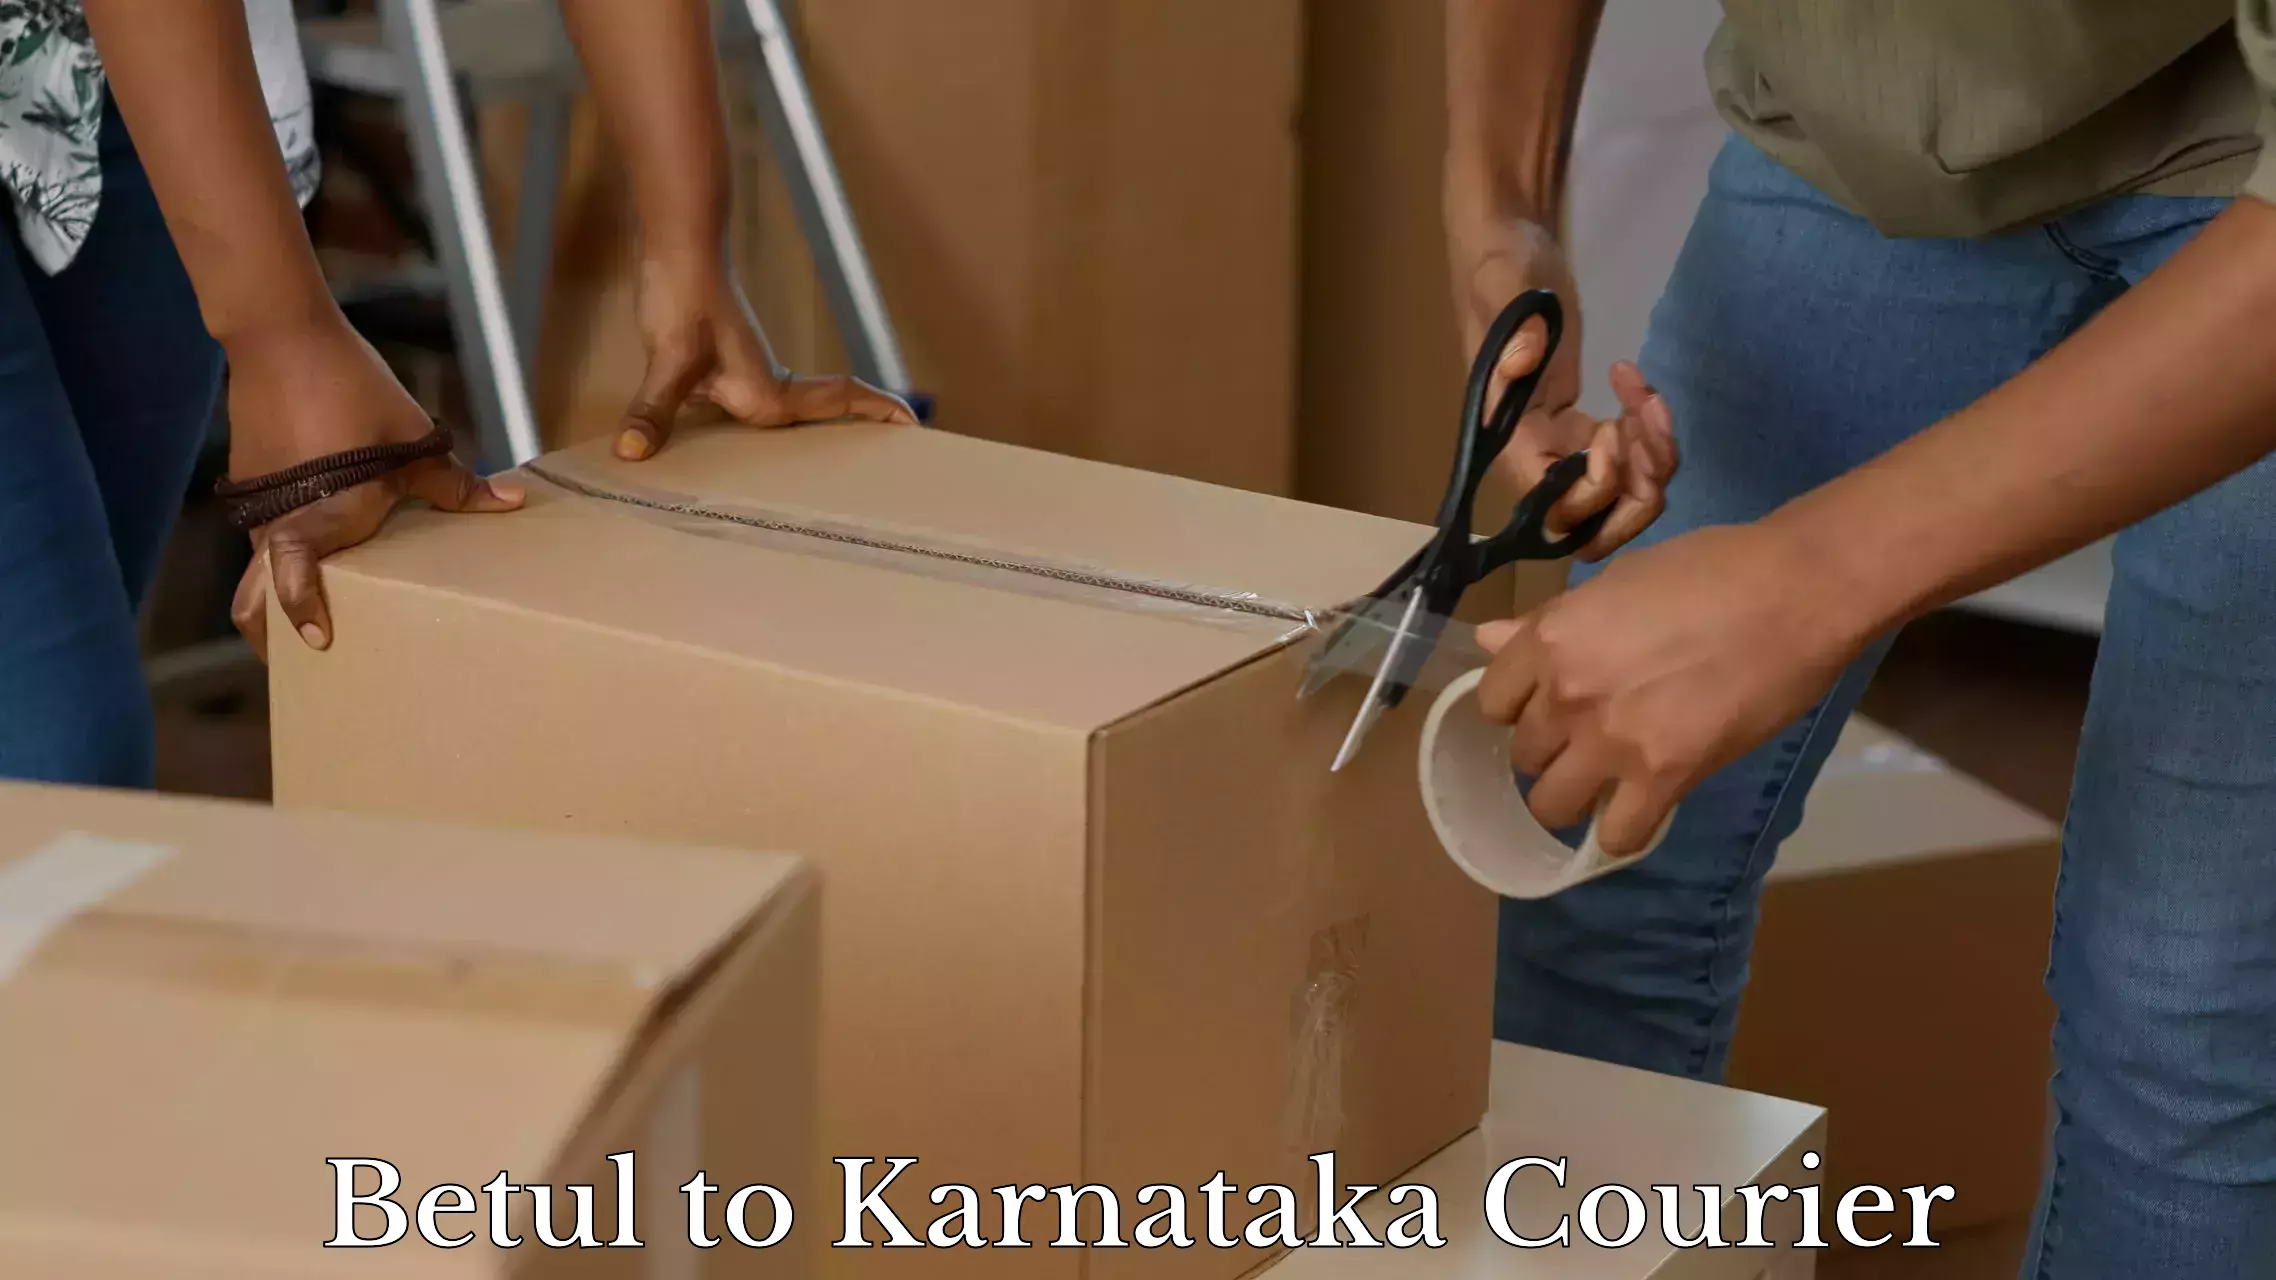 Luggage delivery app Betul to Karnataka